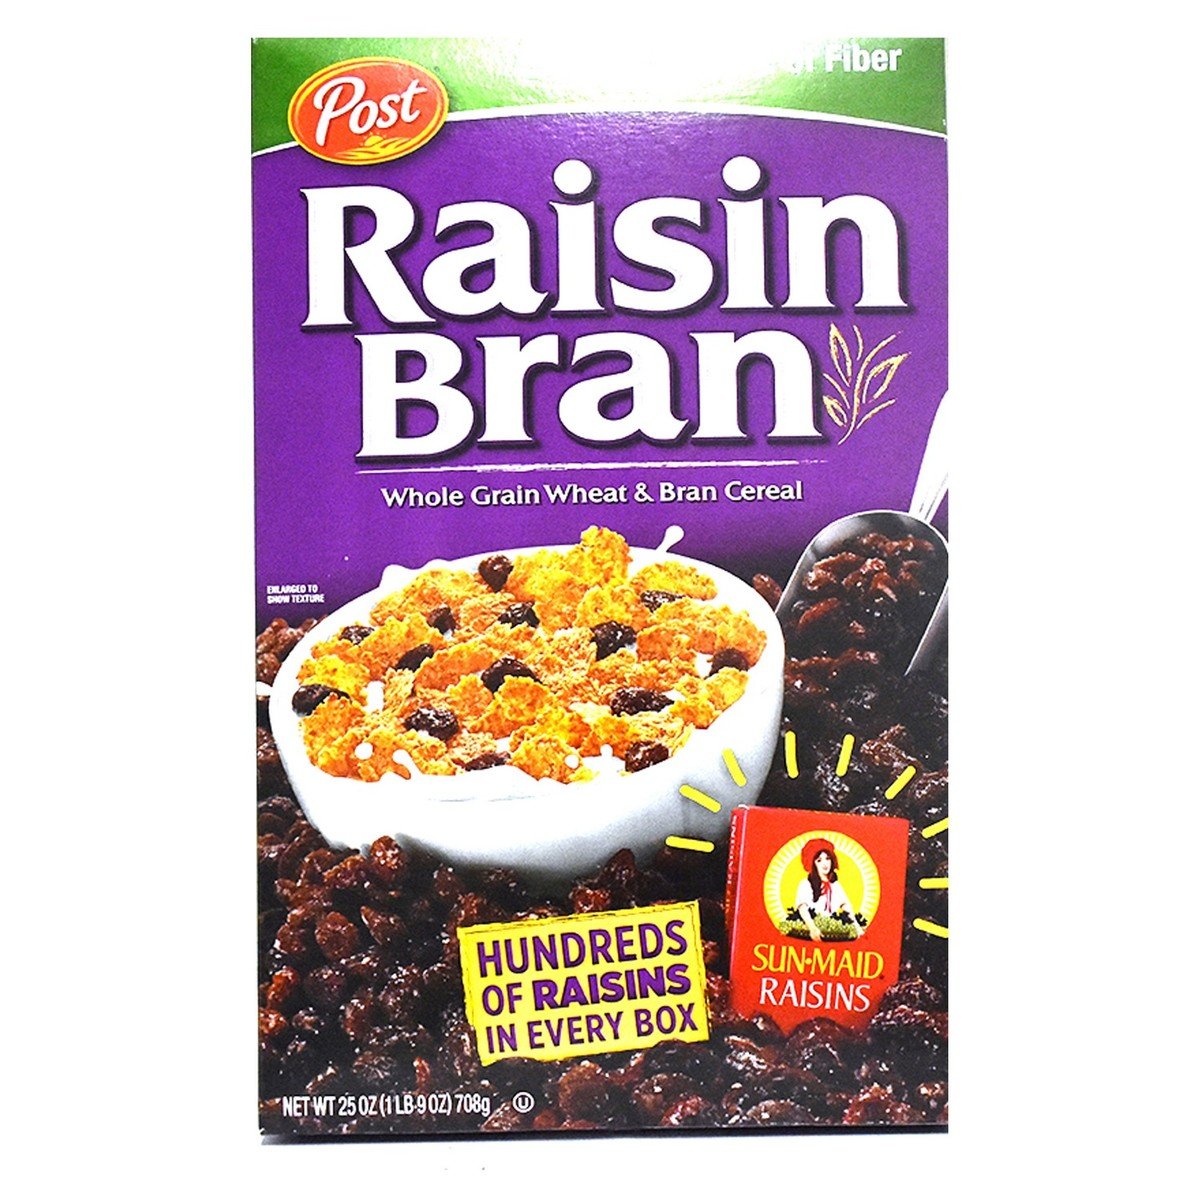 Post Raisin Bran Whole Grain Wheat & Bran Cereal 708 g